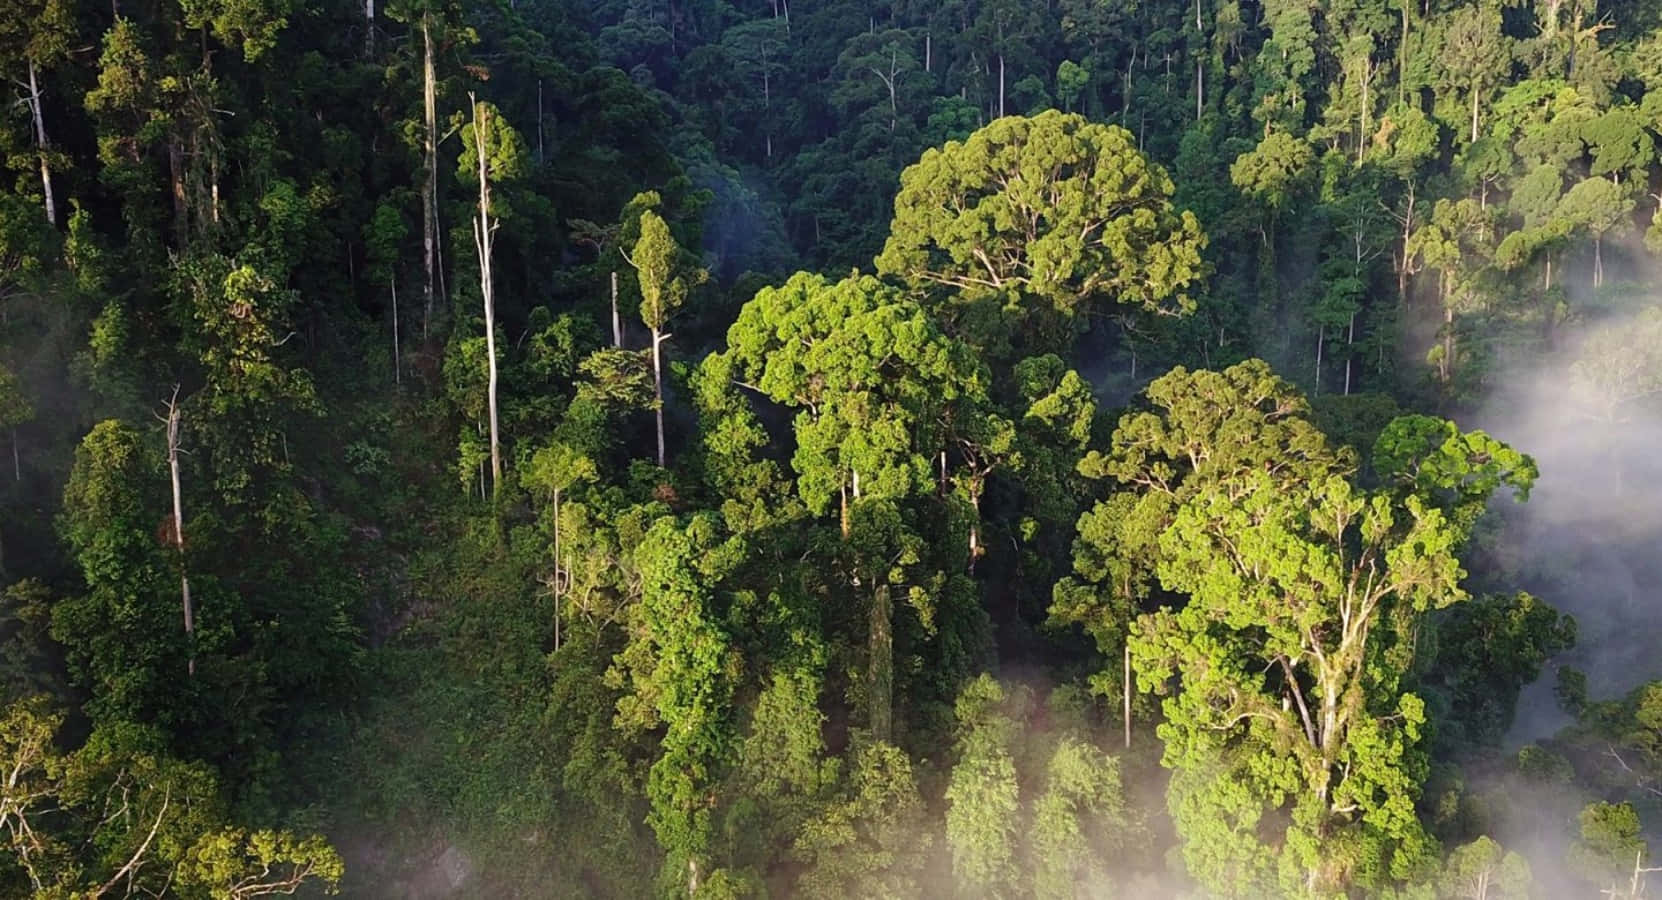 Explore the lush and vibrant rainforest